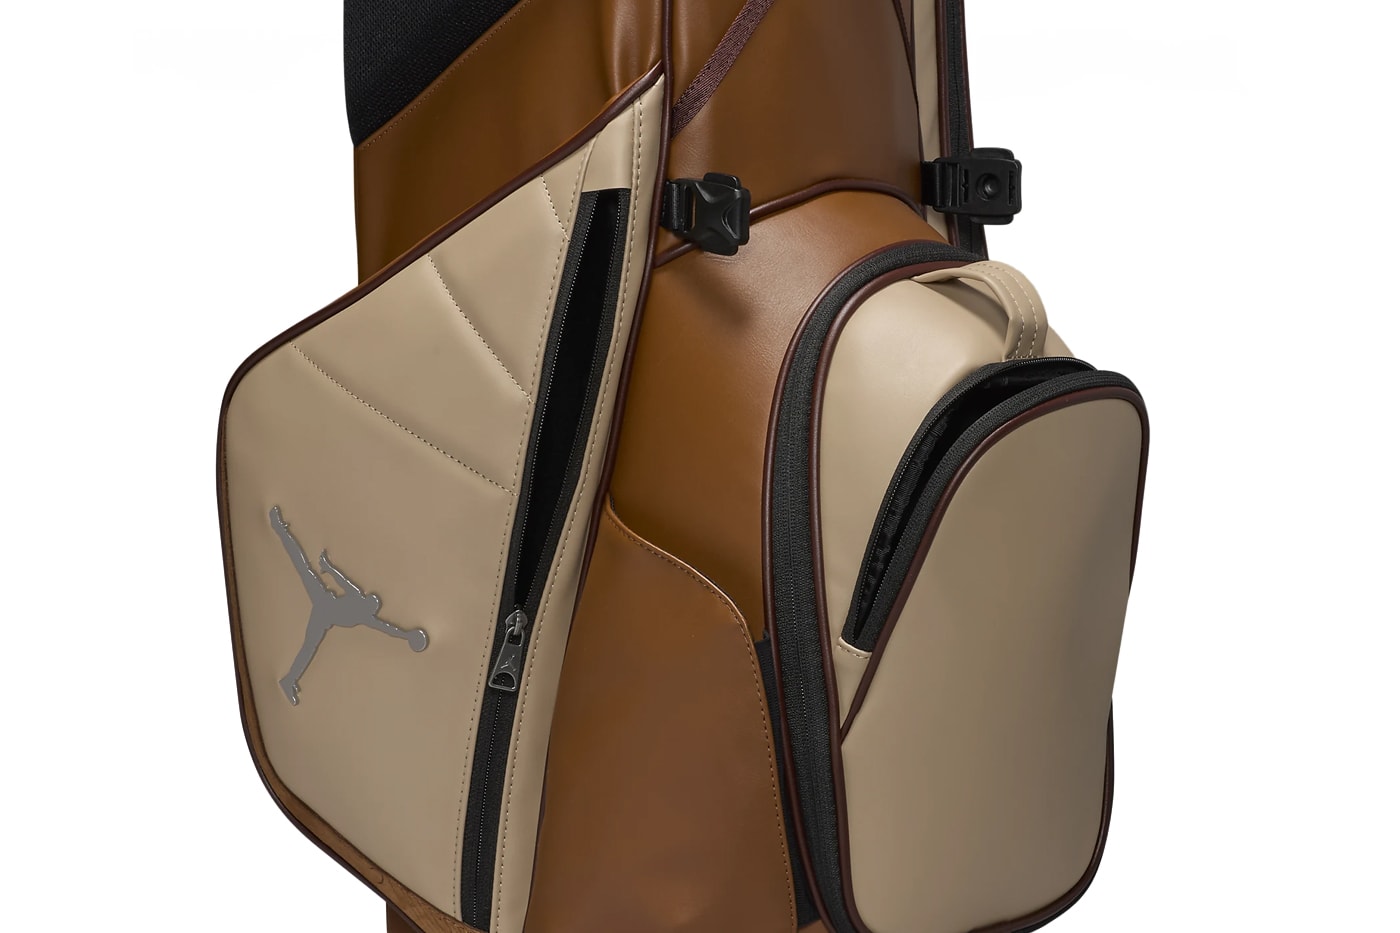 jordan fade away luxe golf bag brown tan leather stand